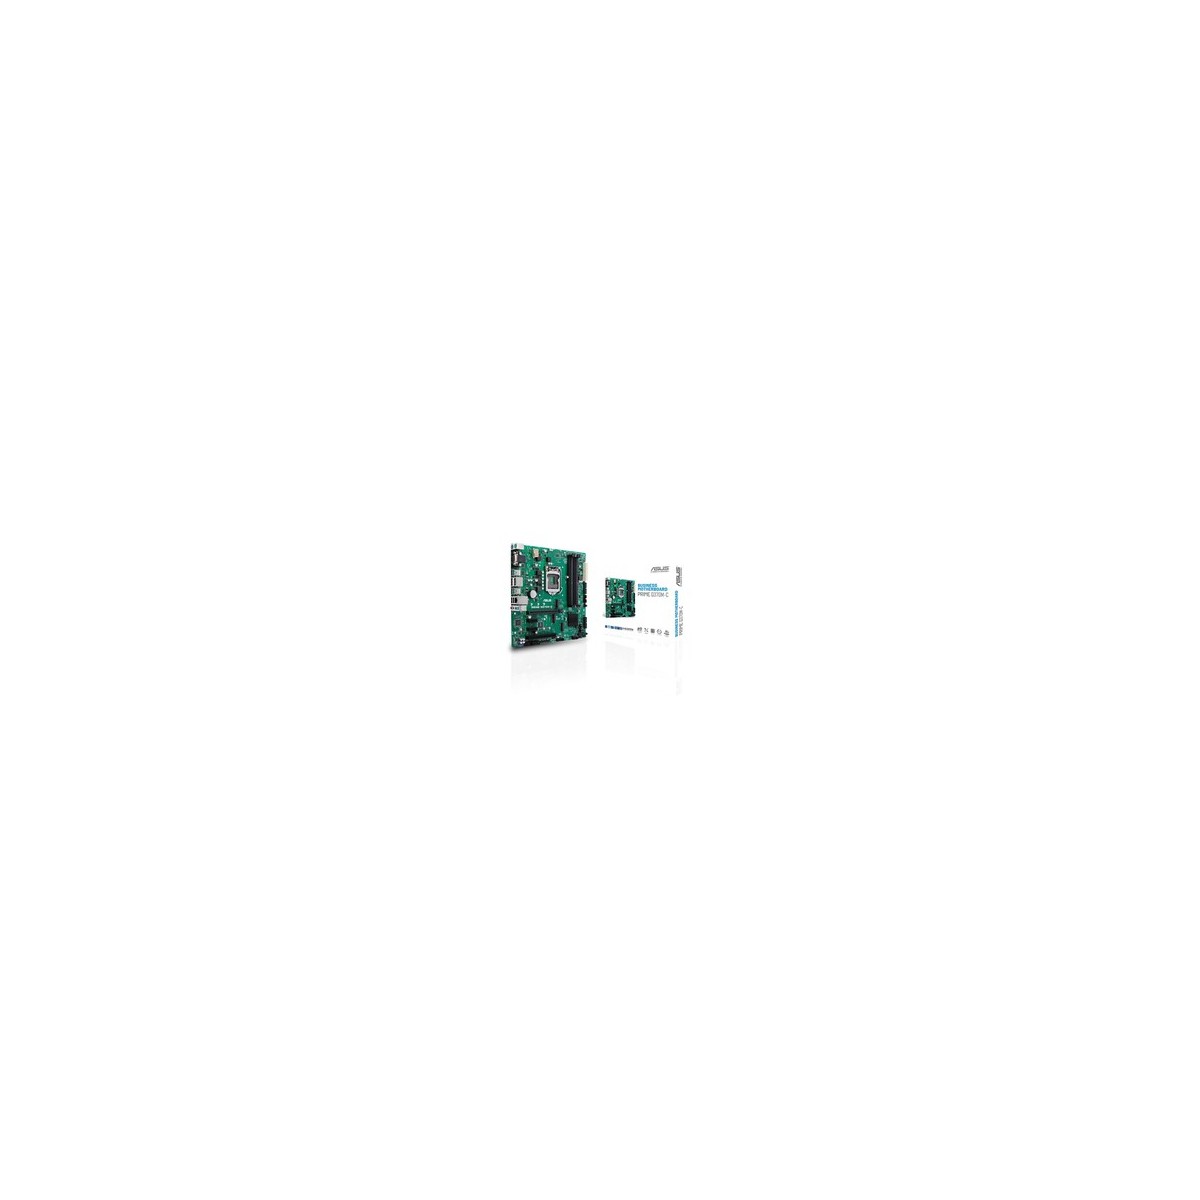 ASUS PRIME Q370M-C Micro-ATX LGA1151 Intel Q370 - Motherboard - Intel Socket 1151 (Core i)